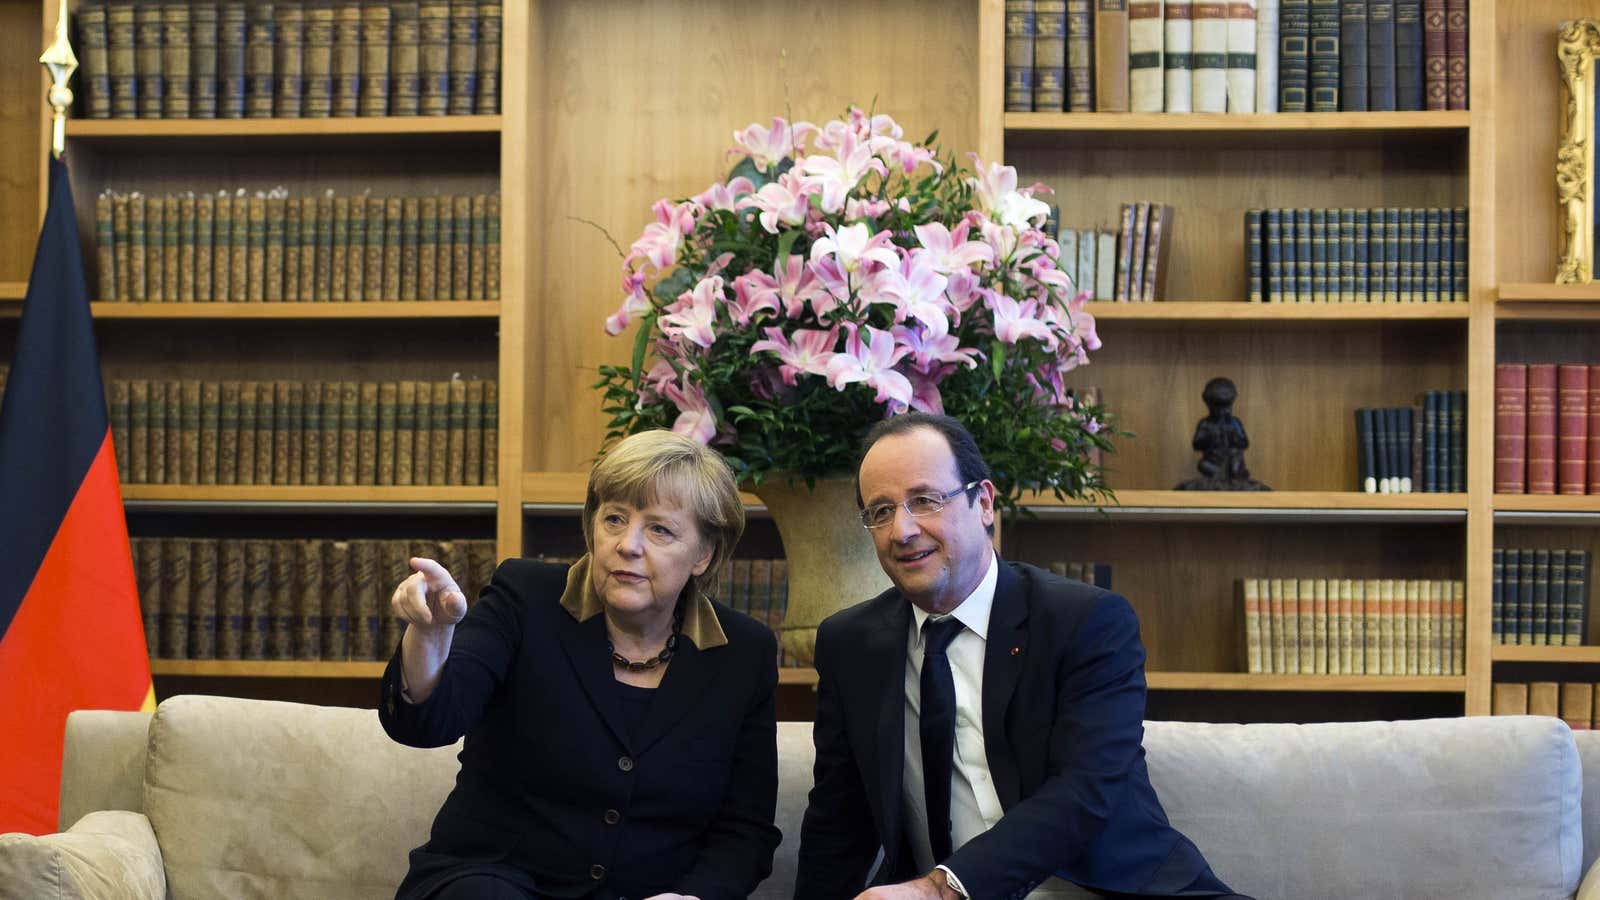 Angela Merkel and François Hollande meet at the French embassy in Berlin.